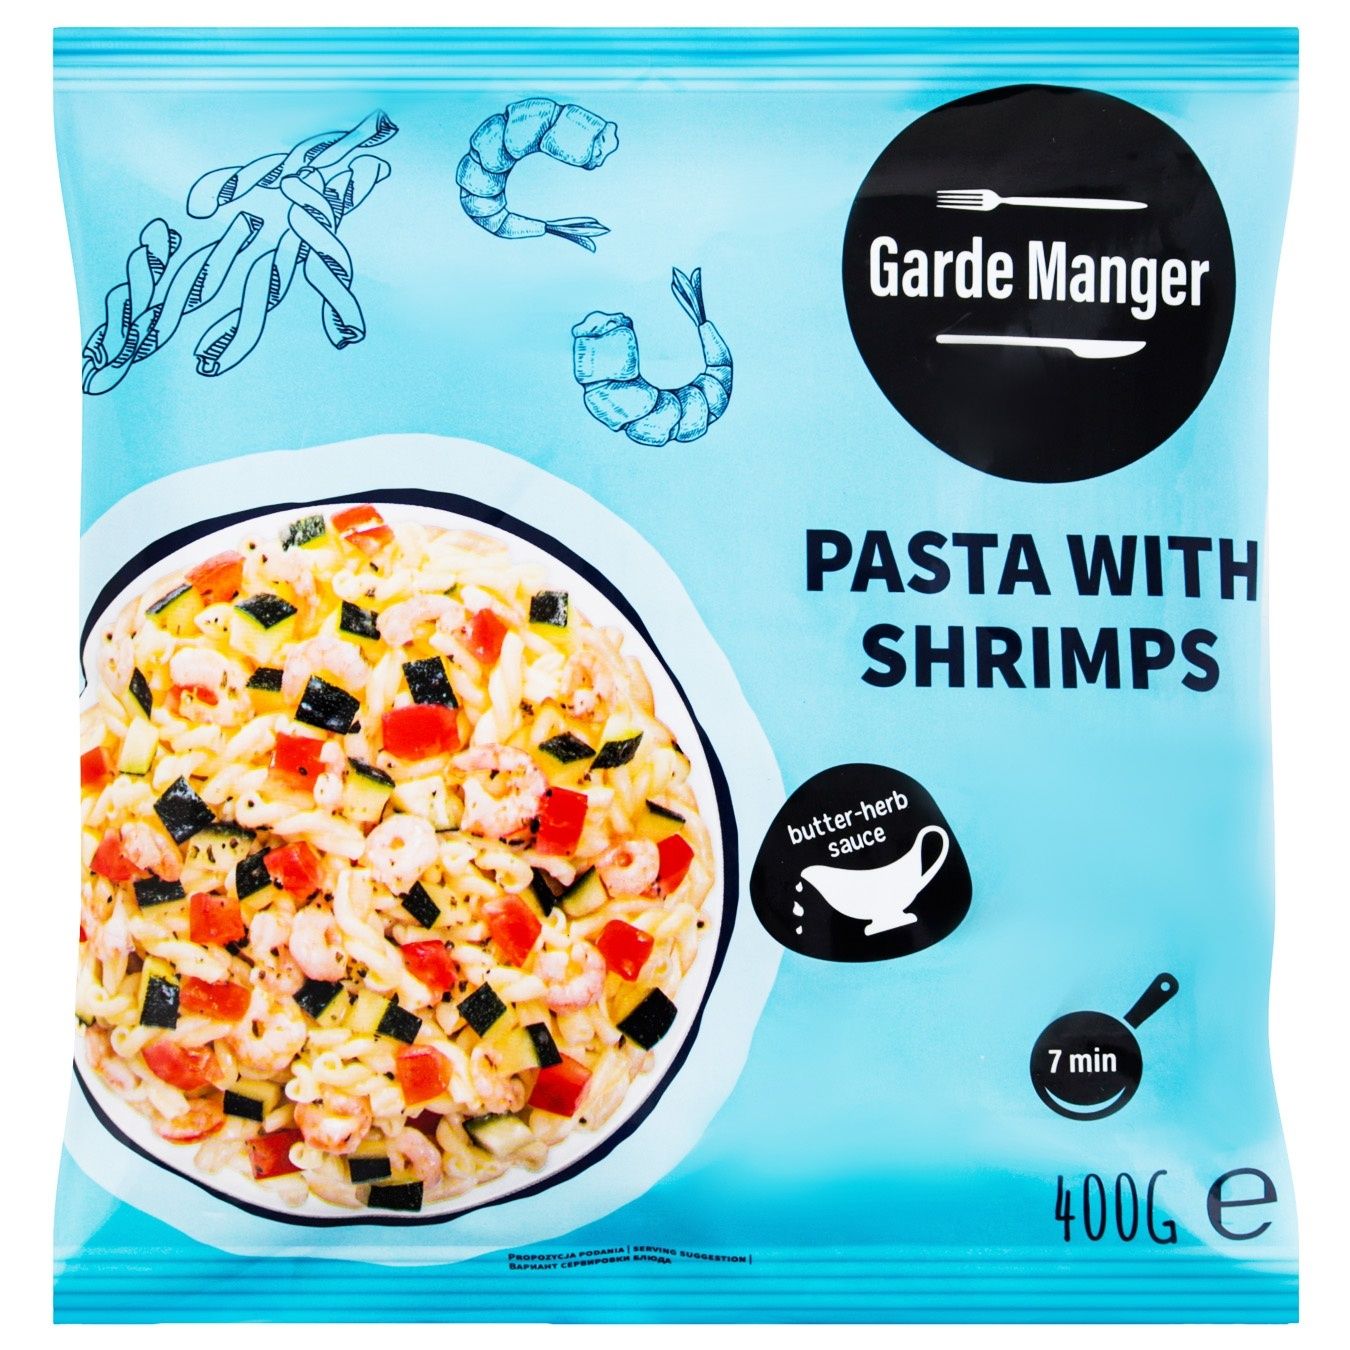 Garde Manger pasta with shrimp 400g